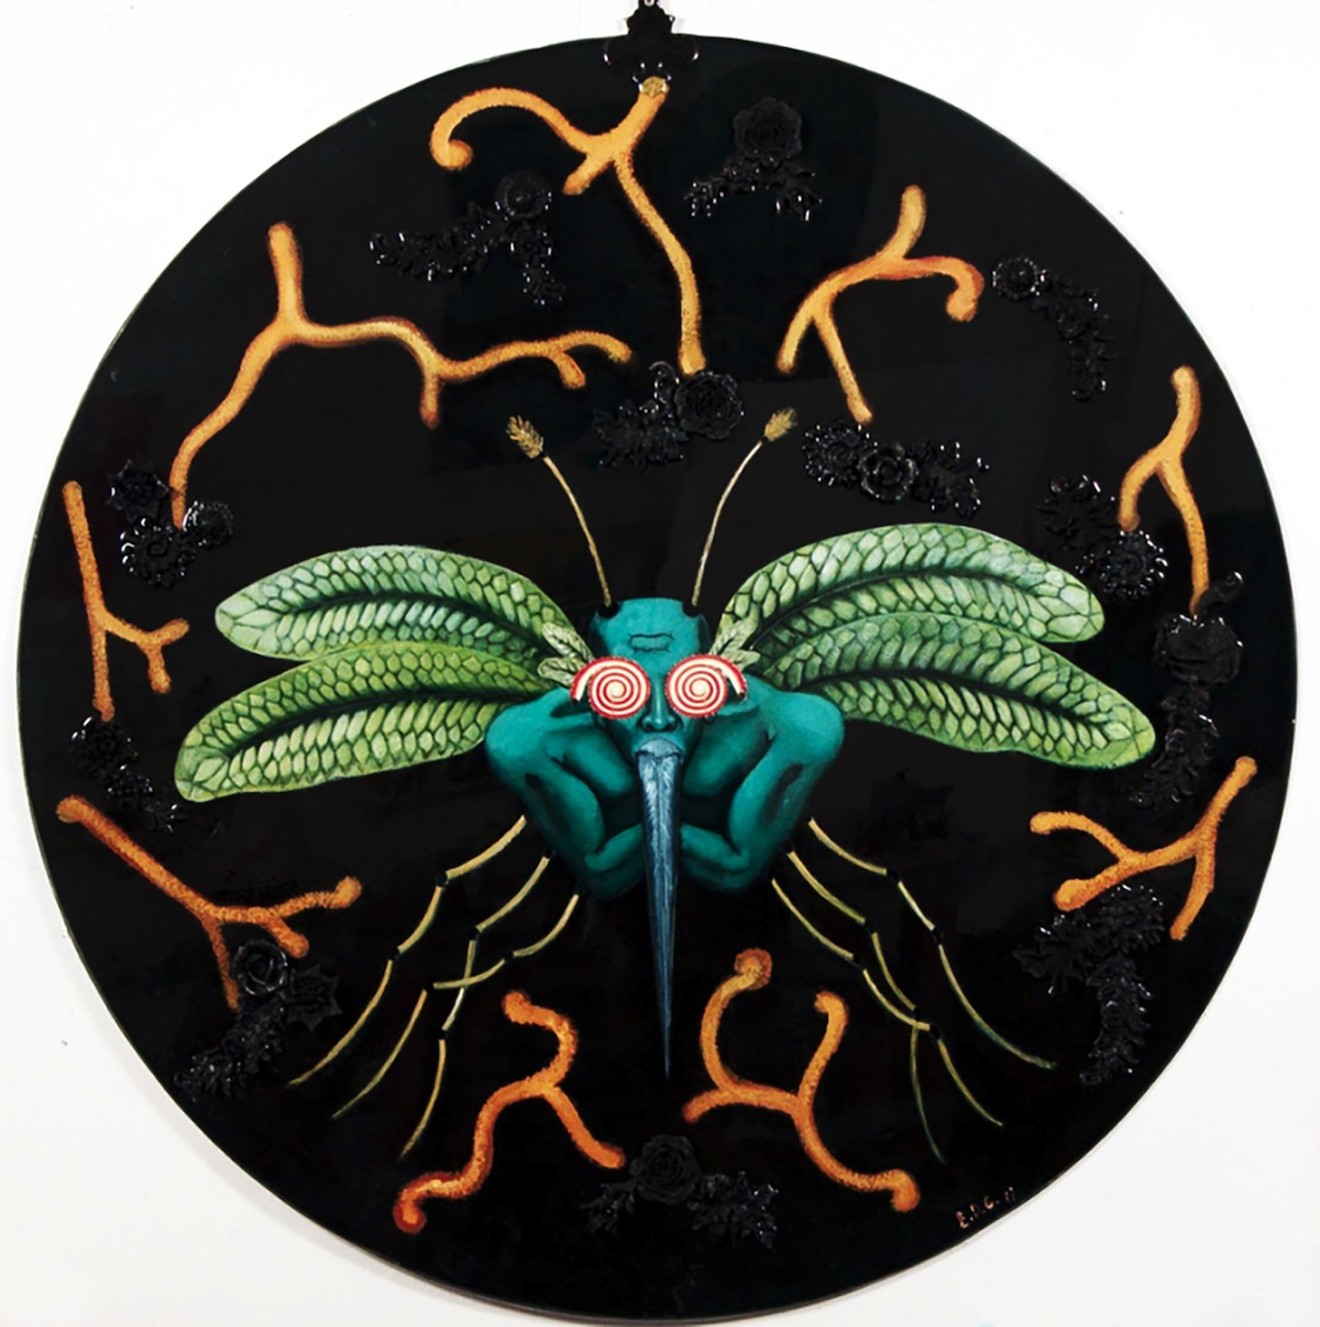 Edouard Duval-Carrié's Makandal as Mosquito, part of MOCA's exhibit "Metamorphosis."